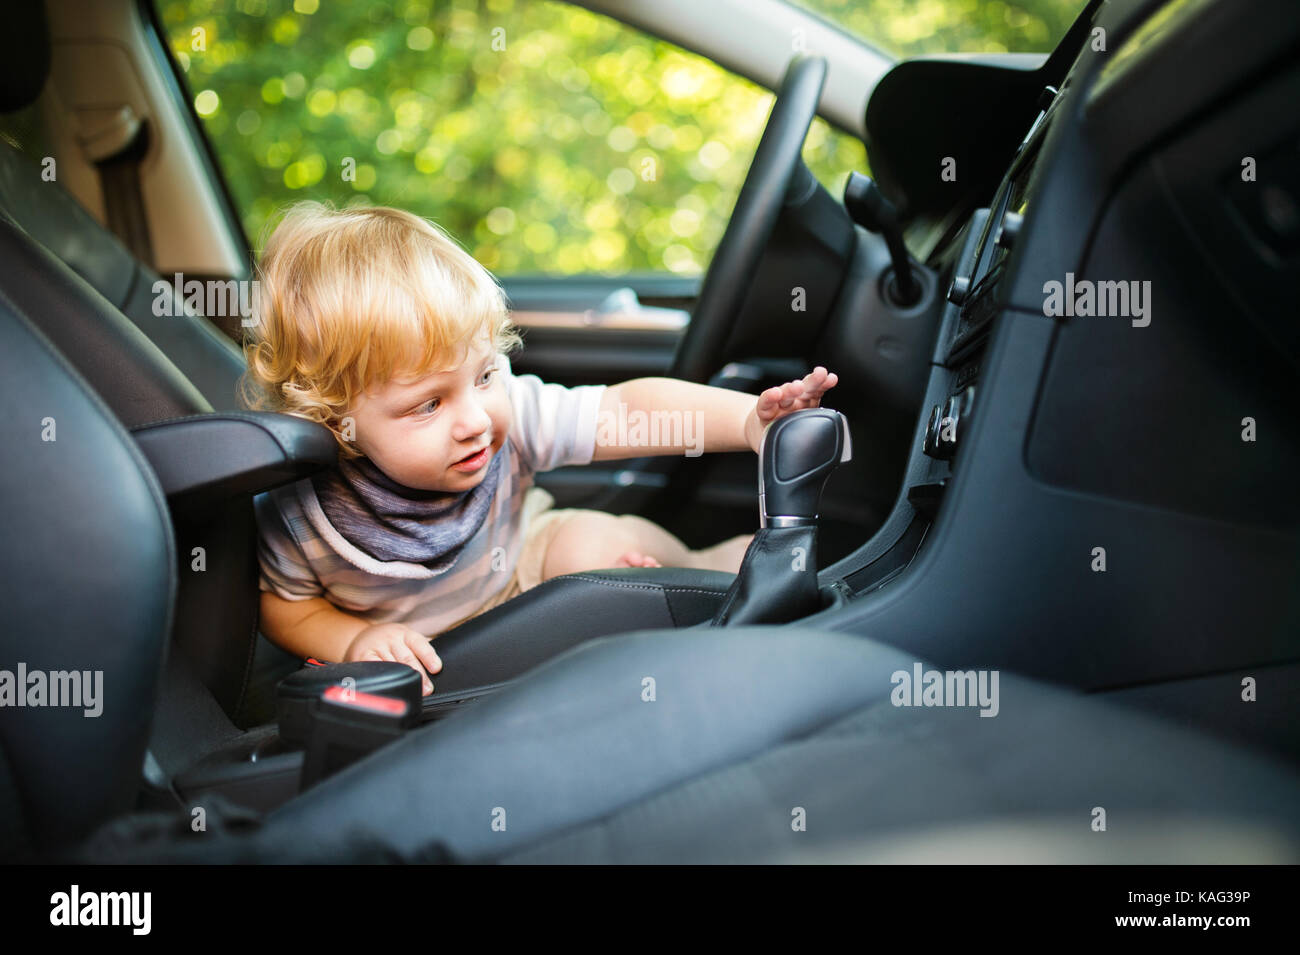 https://c8.alamy.com/comp/KAG39P/little-boy-playing-in-the-car-pretending-to-drive-it-KAG39P.jpg